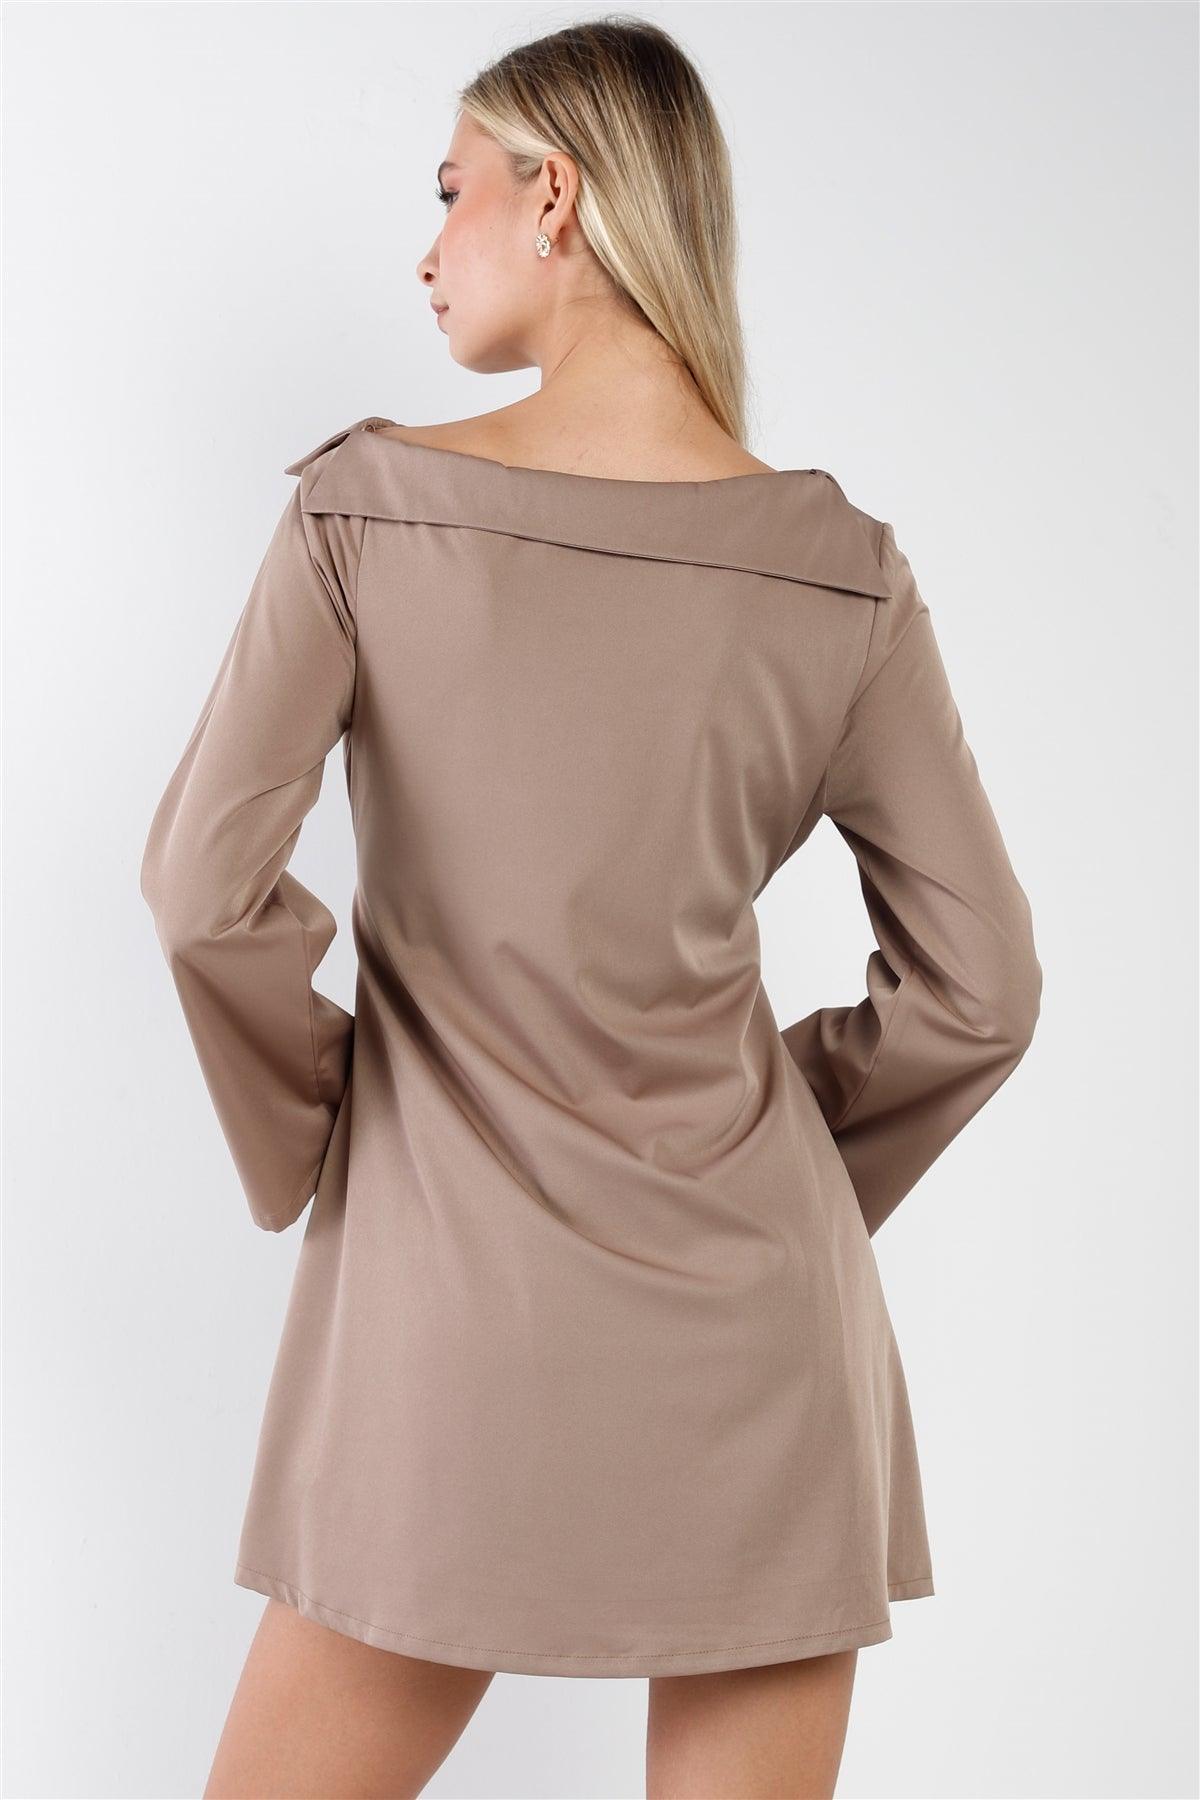 Mocha Straight Neck Solid Front-Tie Long Sleeve Mini Dress /2-2-2